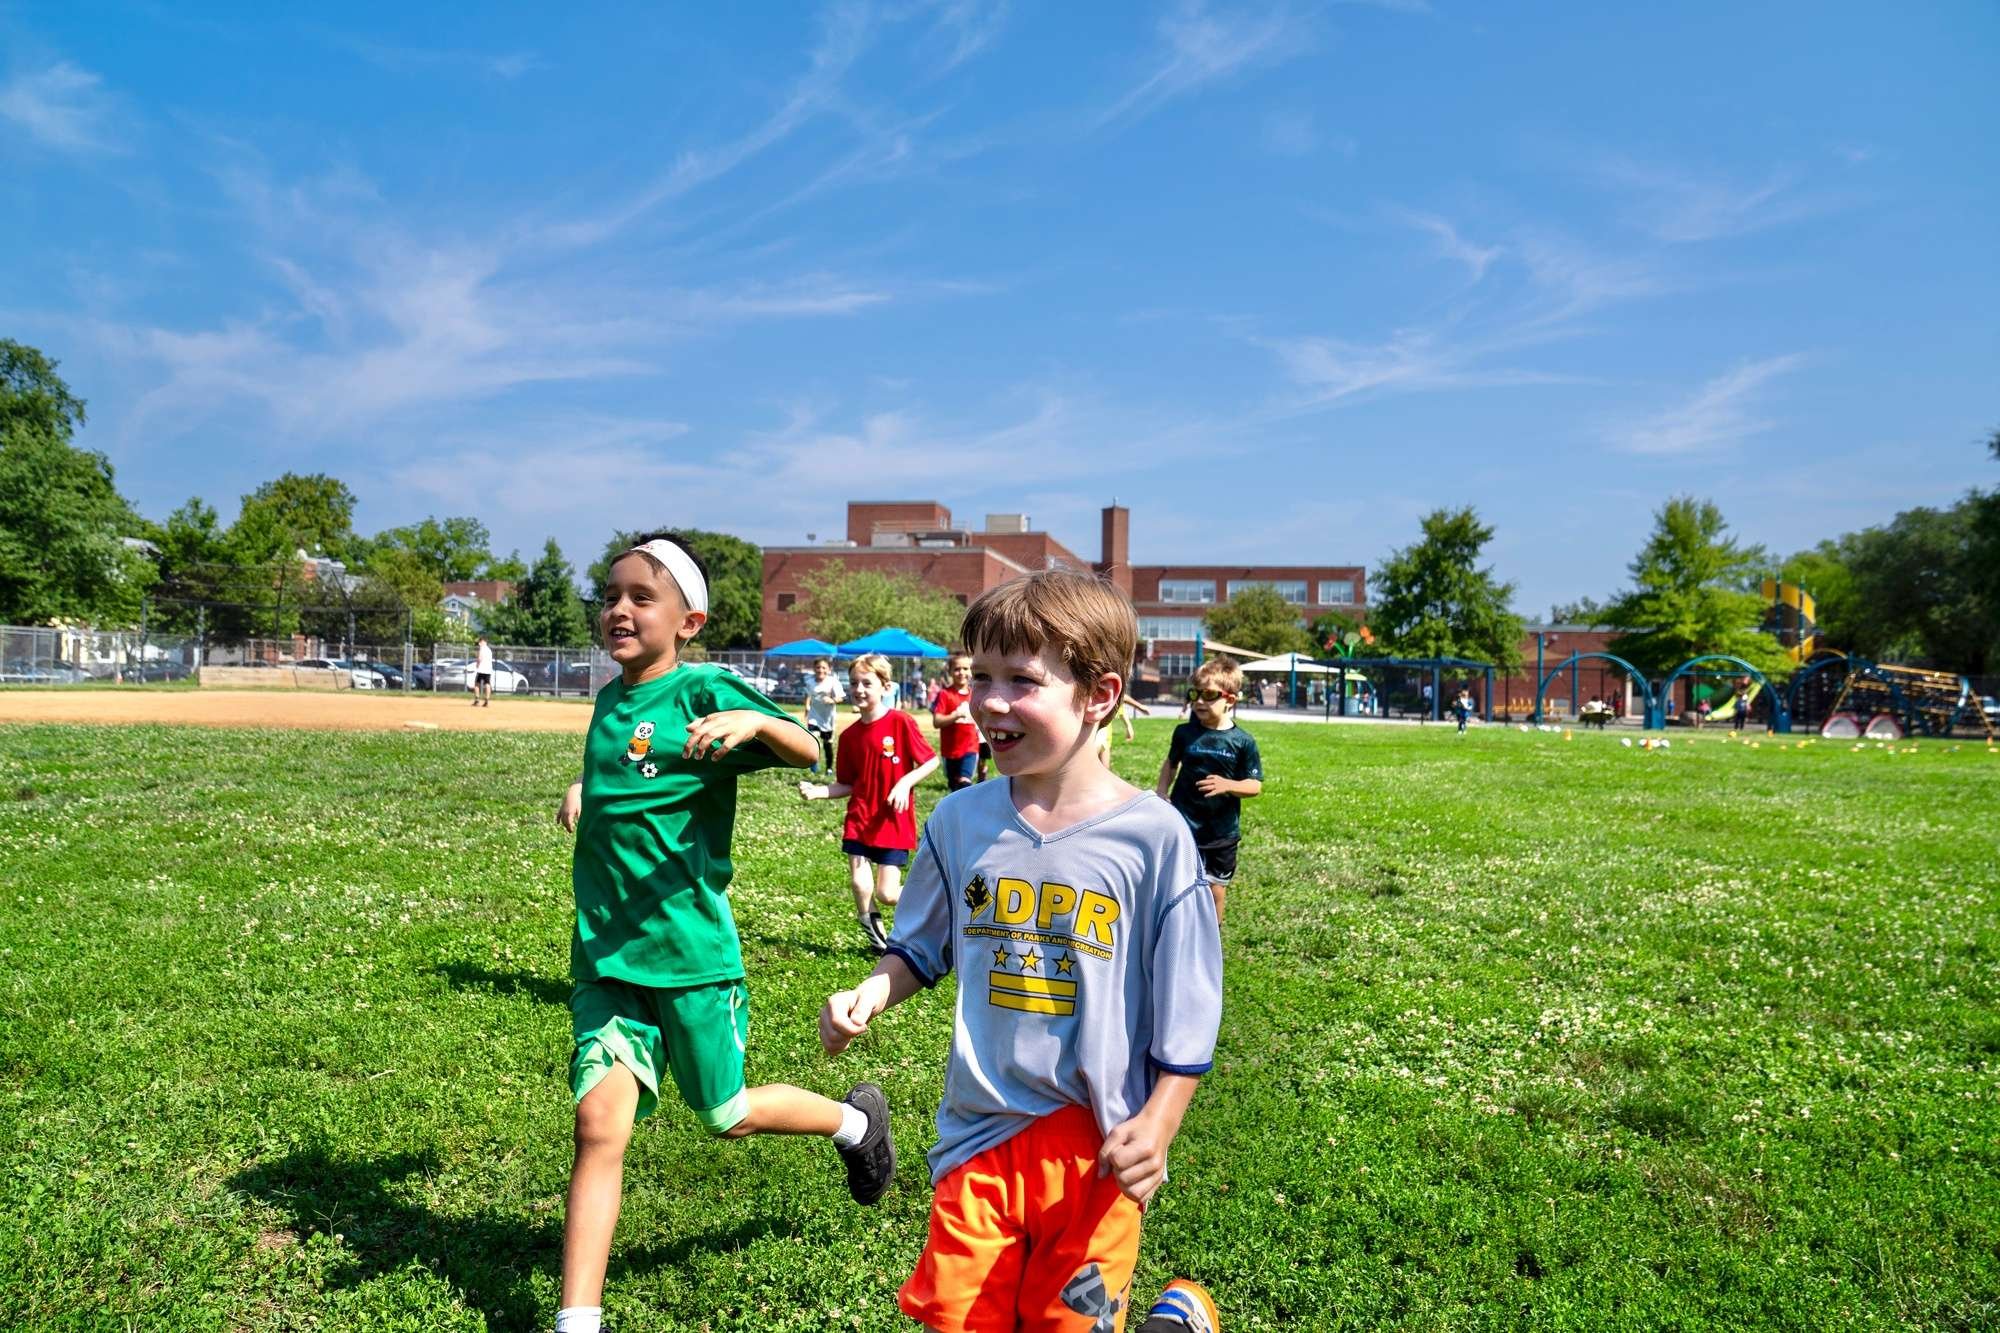 Dc-way-soccer-club-for-kids-in-washington-dc-summer-camp-at-tyler-elementary-school- 0260.jpg